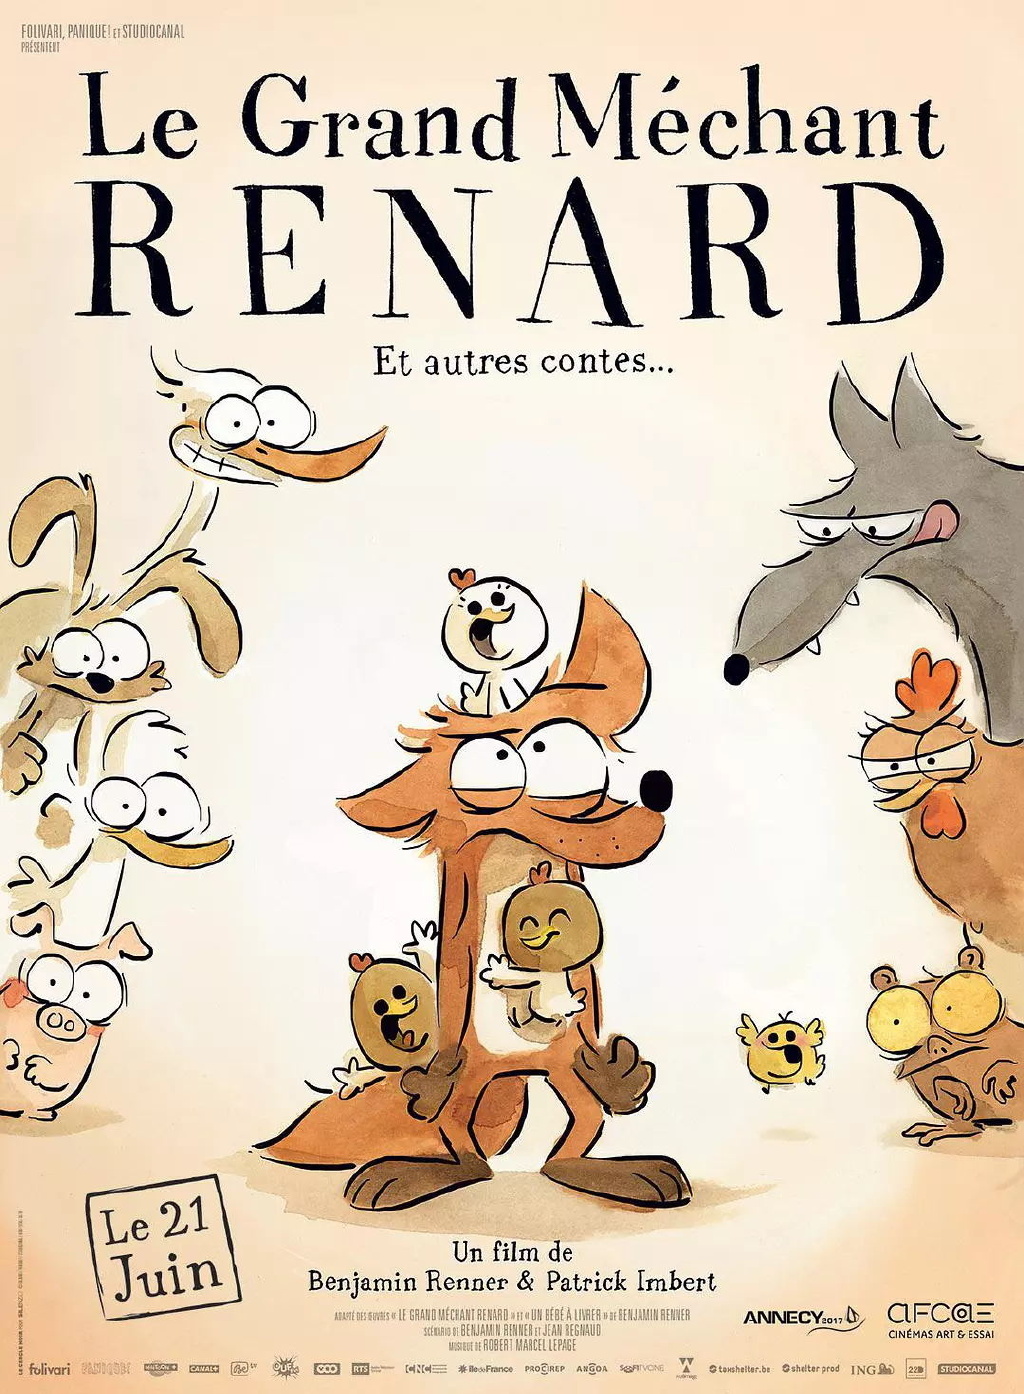 Le Grand Méchant Renard et autres contes... / 谁是大坏狐(台) / 大坏狐狸的动物童话 / 大坏狐狸与其他童话 / 大坏狐狸与其他故事 / The Big Bad Fox and Other Tales...海报